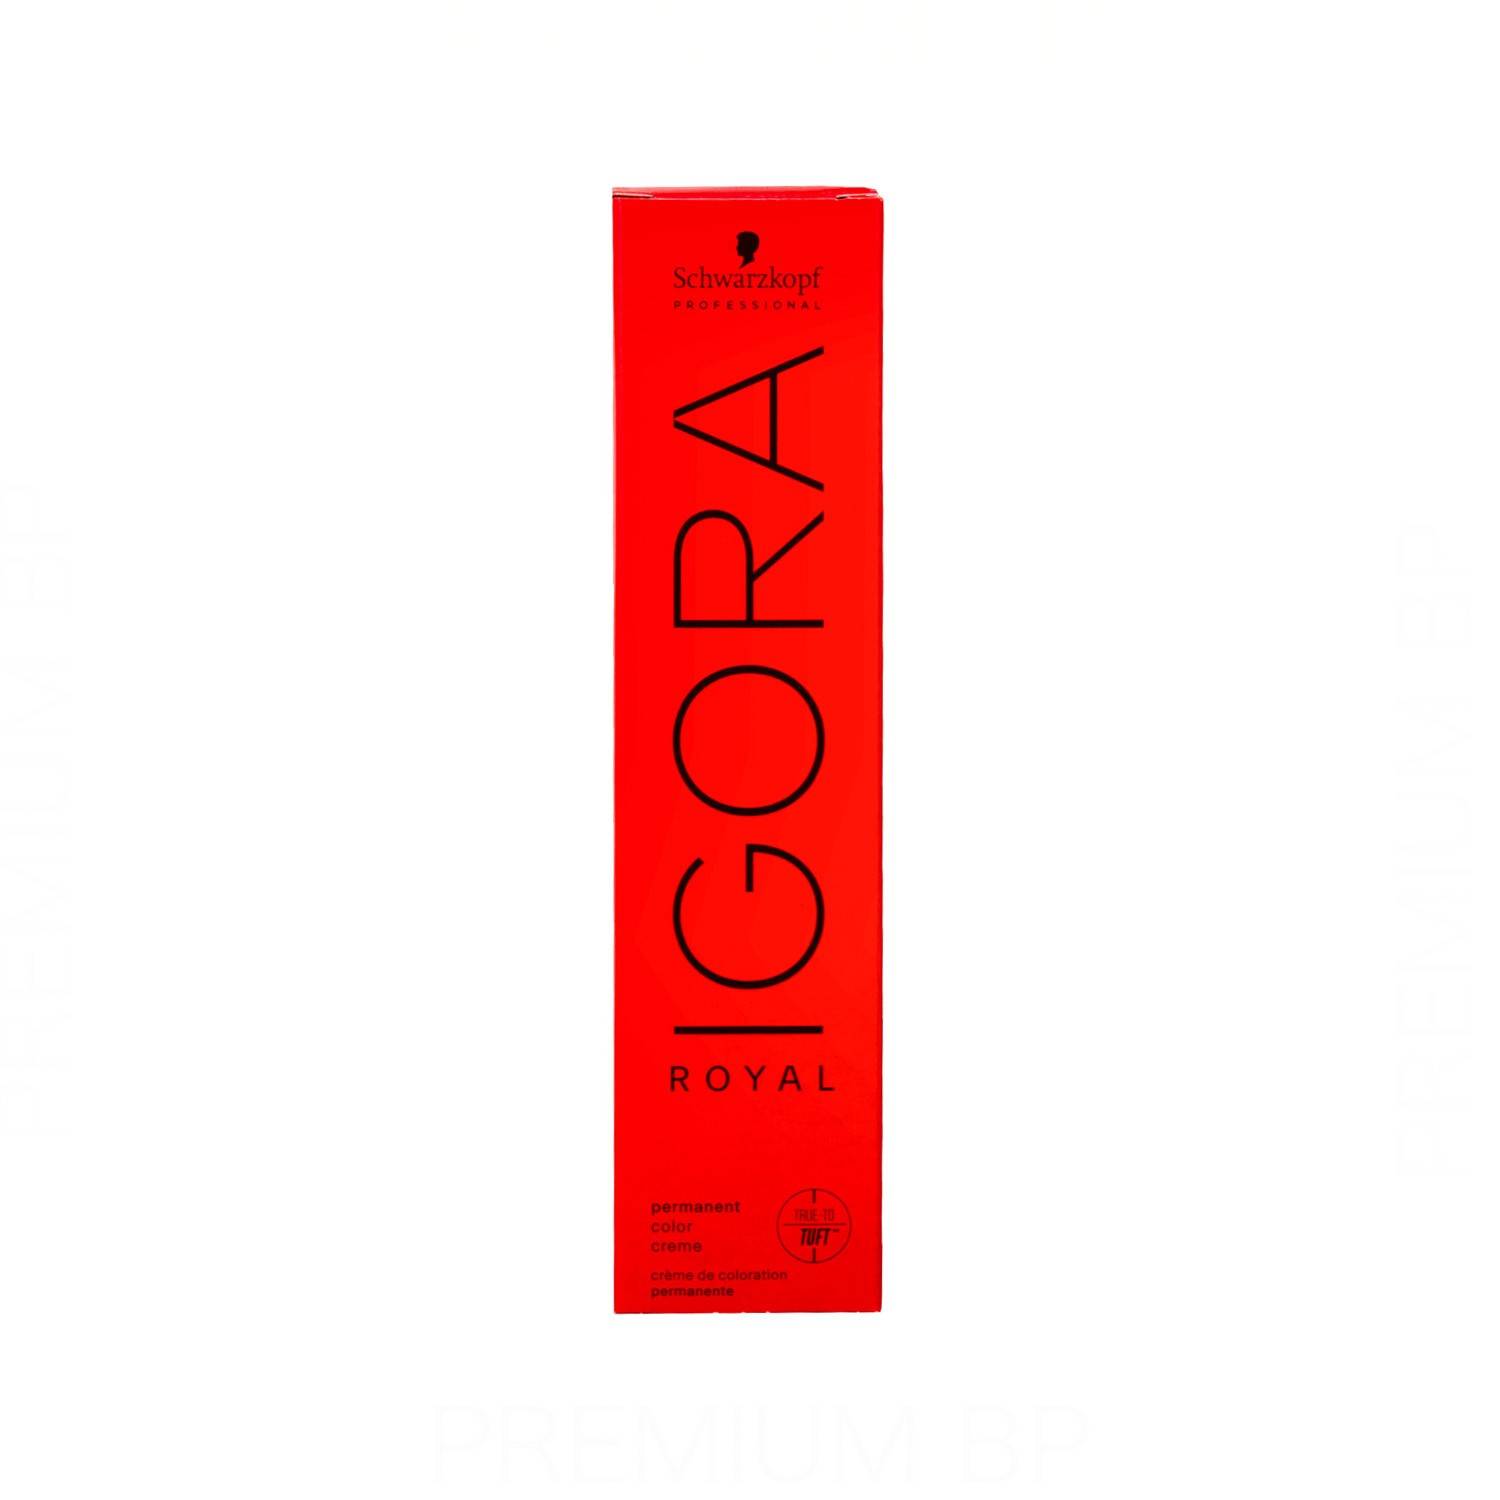 ✓ Buy online Schwarzkopf Igora Royal 60 Ml, Color 5-1 at the best ...